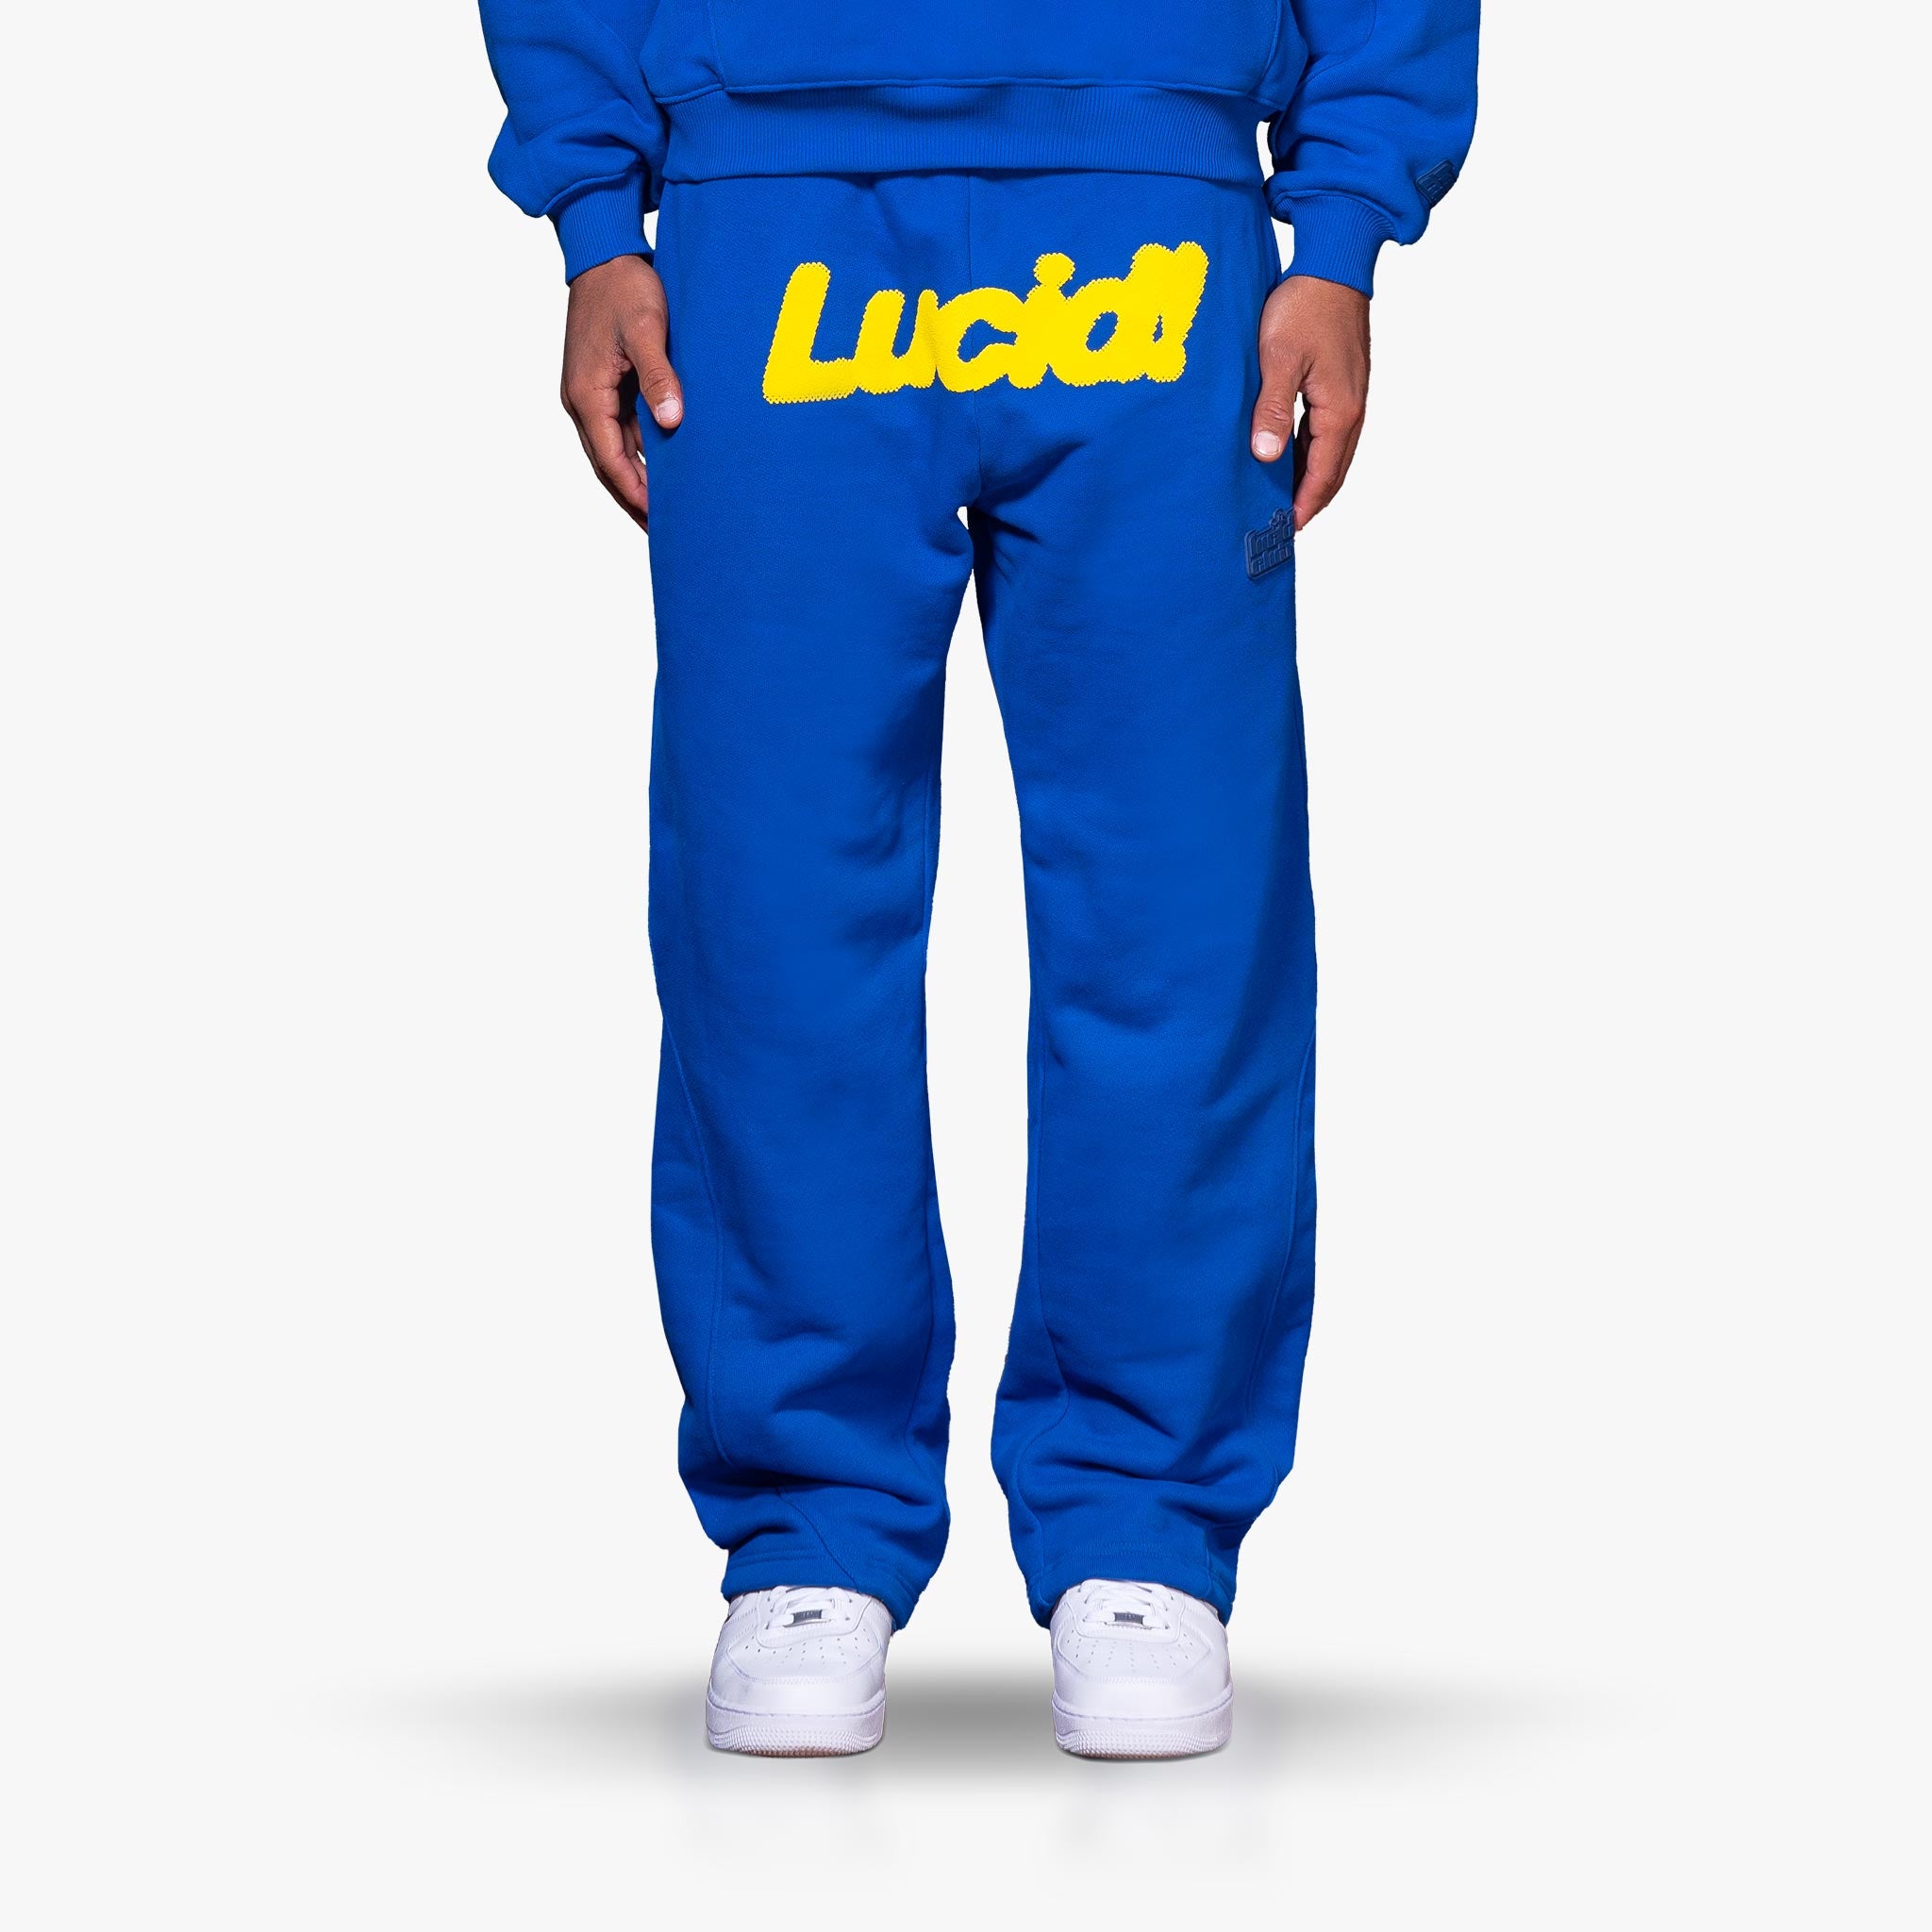 Lucid! Sweatpants Blue/Yellow